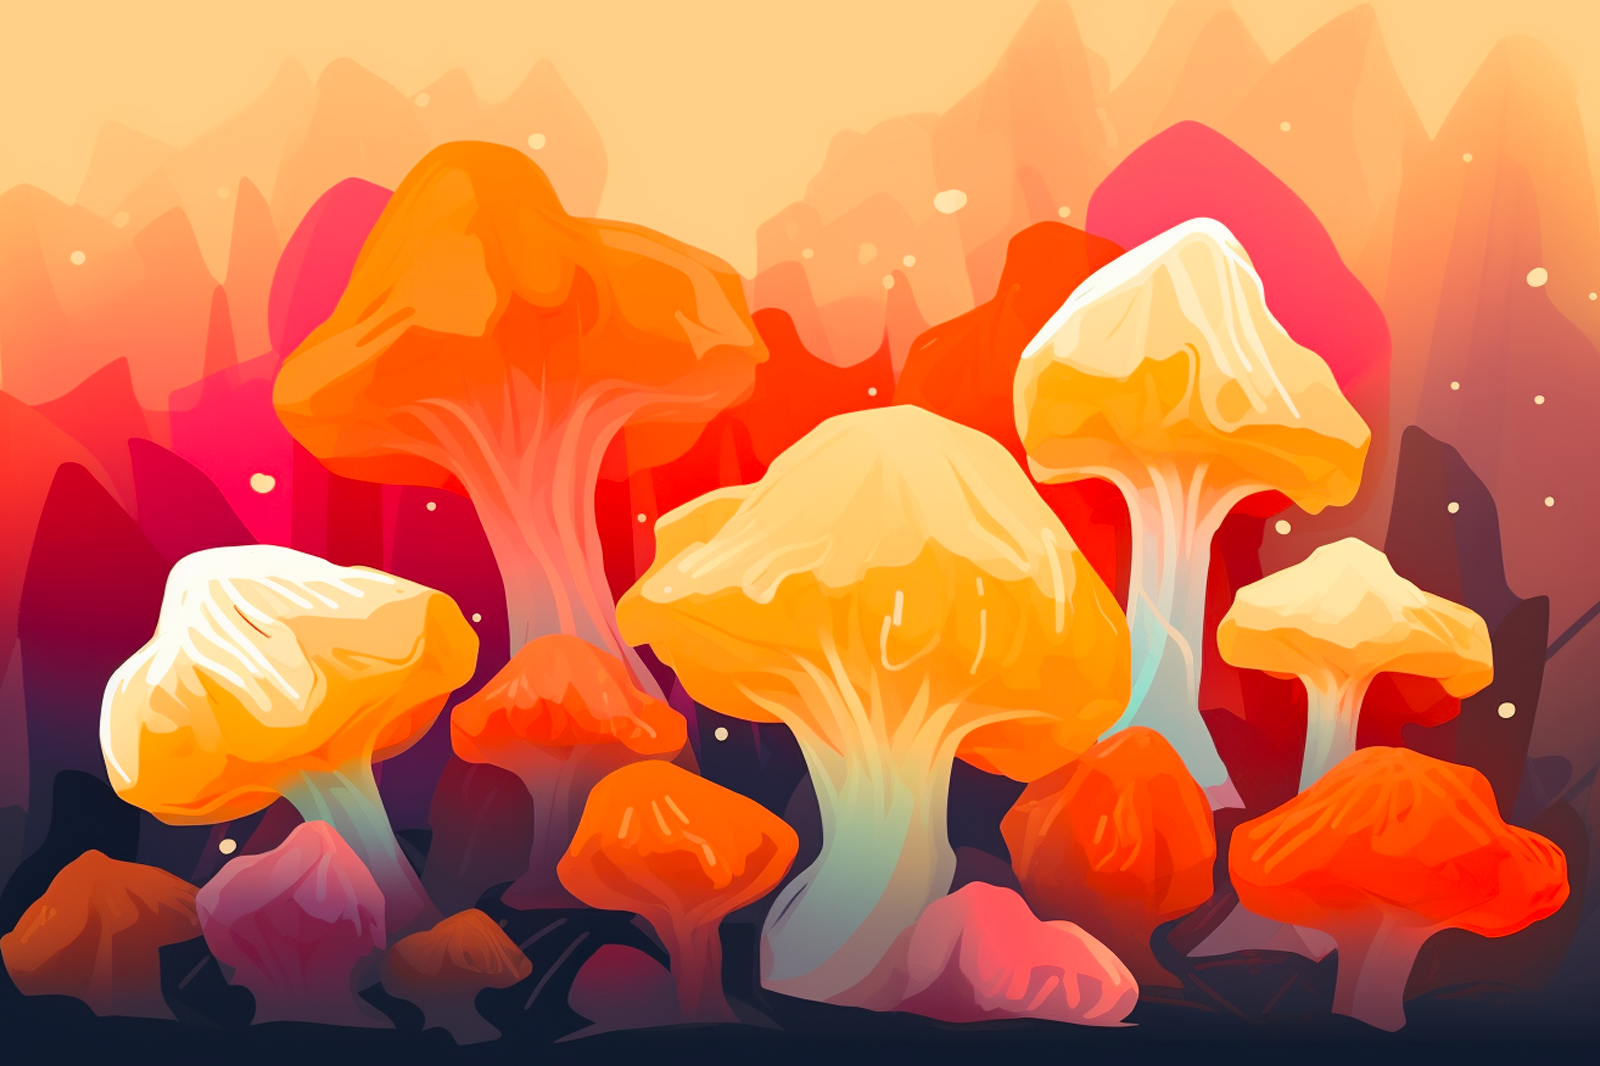 Colorful mushrooms painted on ground against orange background